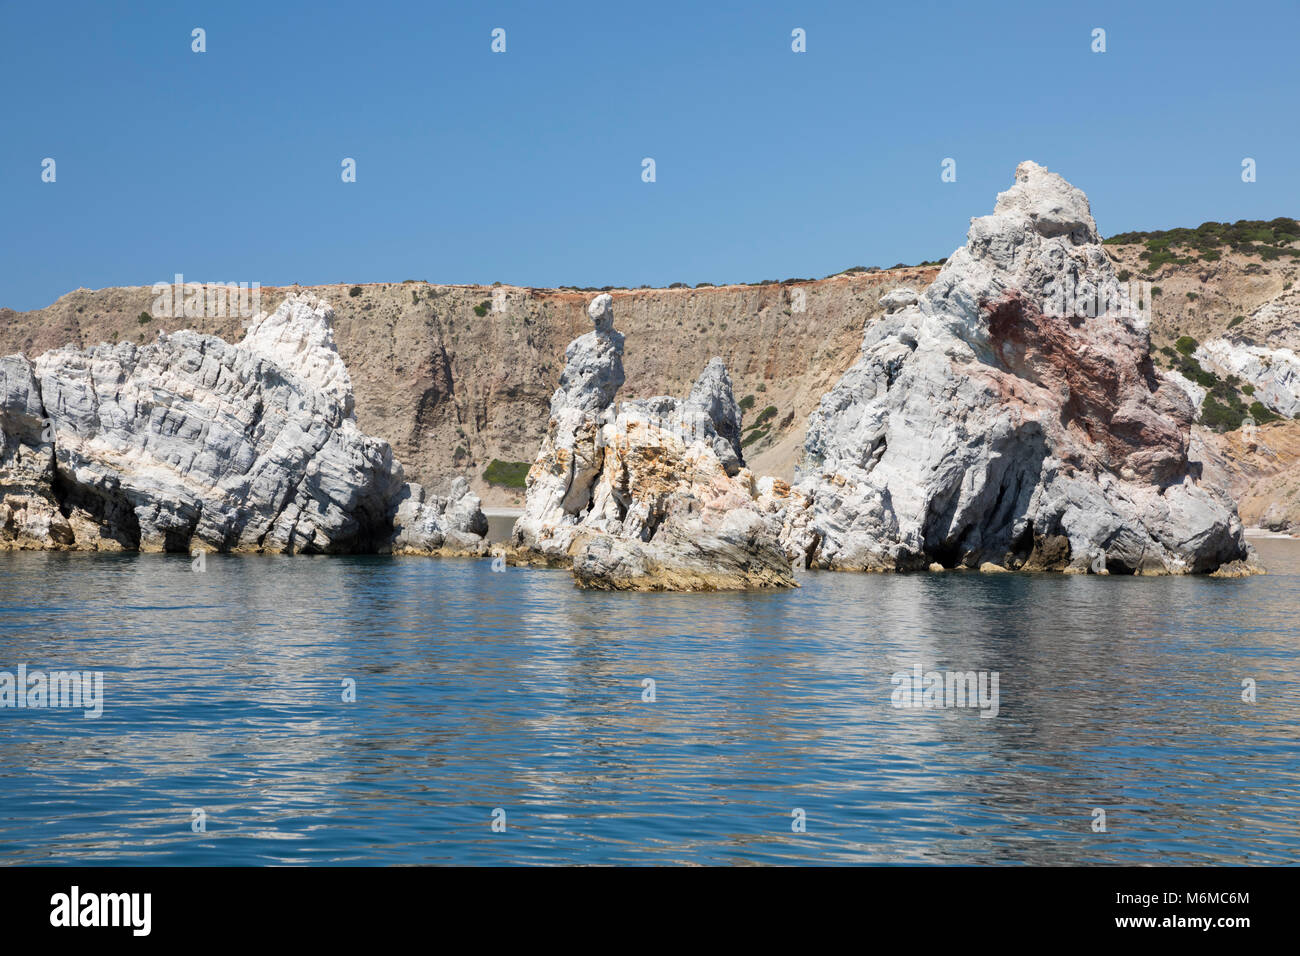 Rock formations on south east coast of island with rock resembling famous statue of Venus de Milo, near Paliochori, Milos, Cyclades, Aegean Sea, Greek Stock Photo